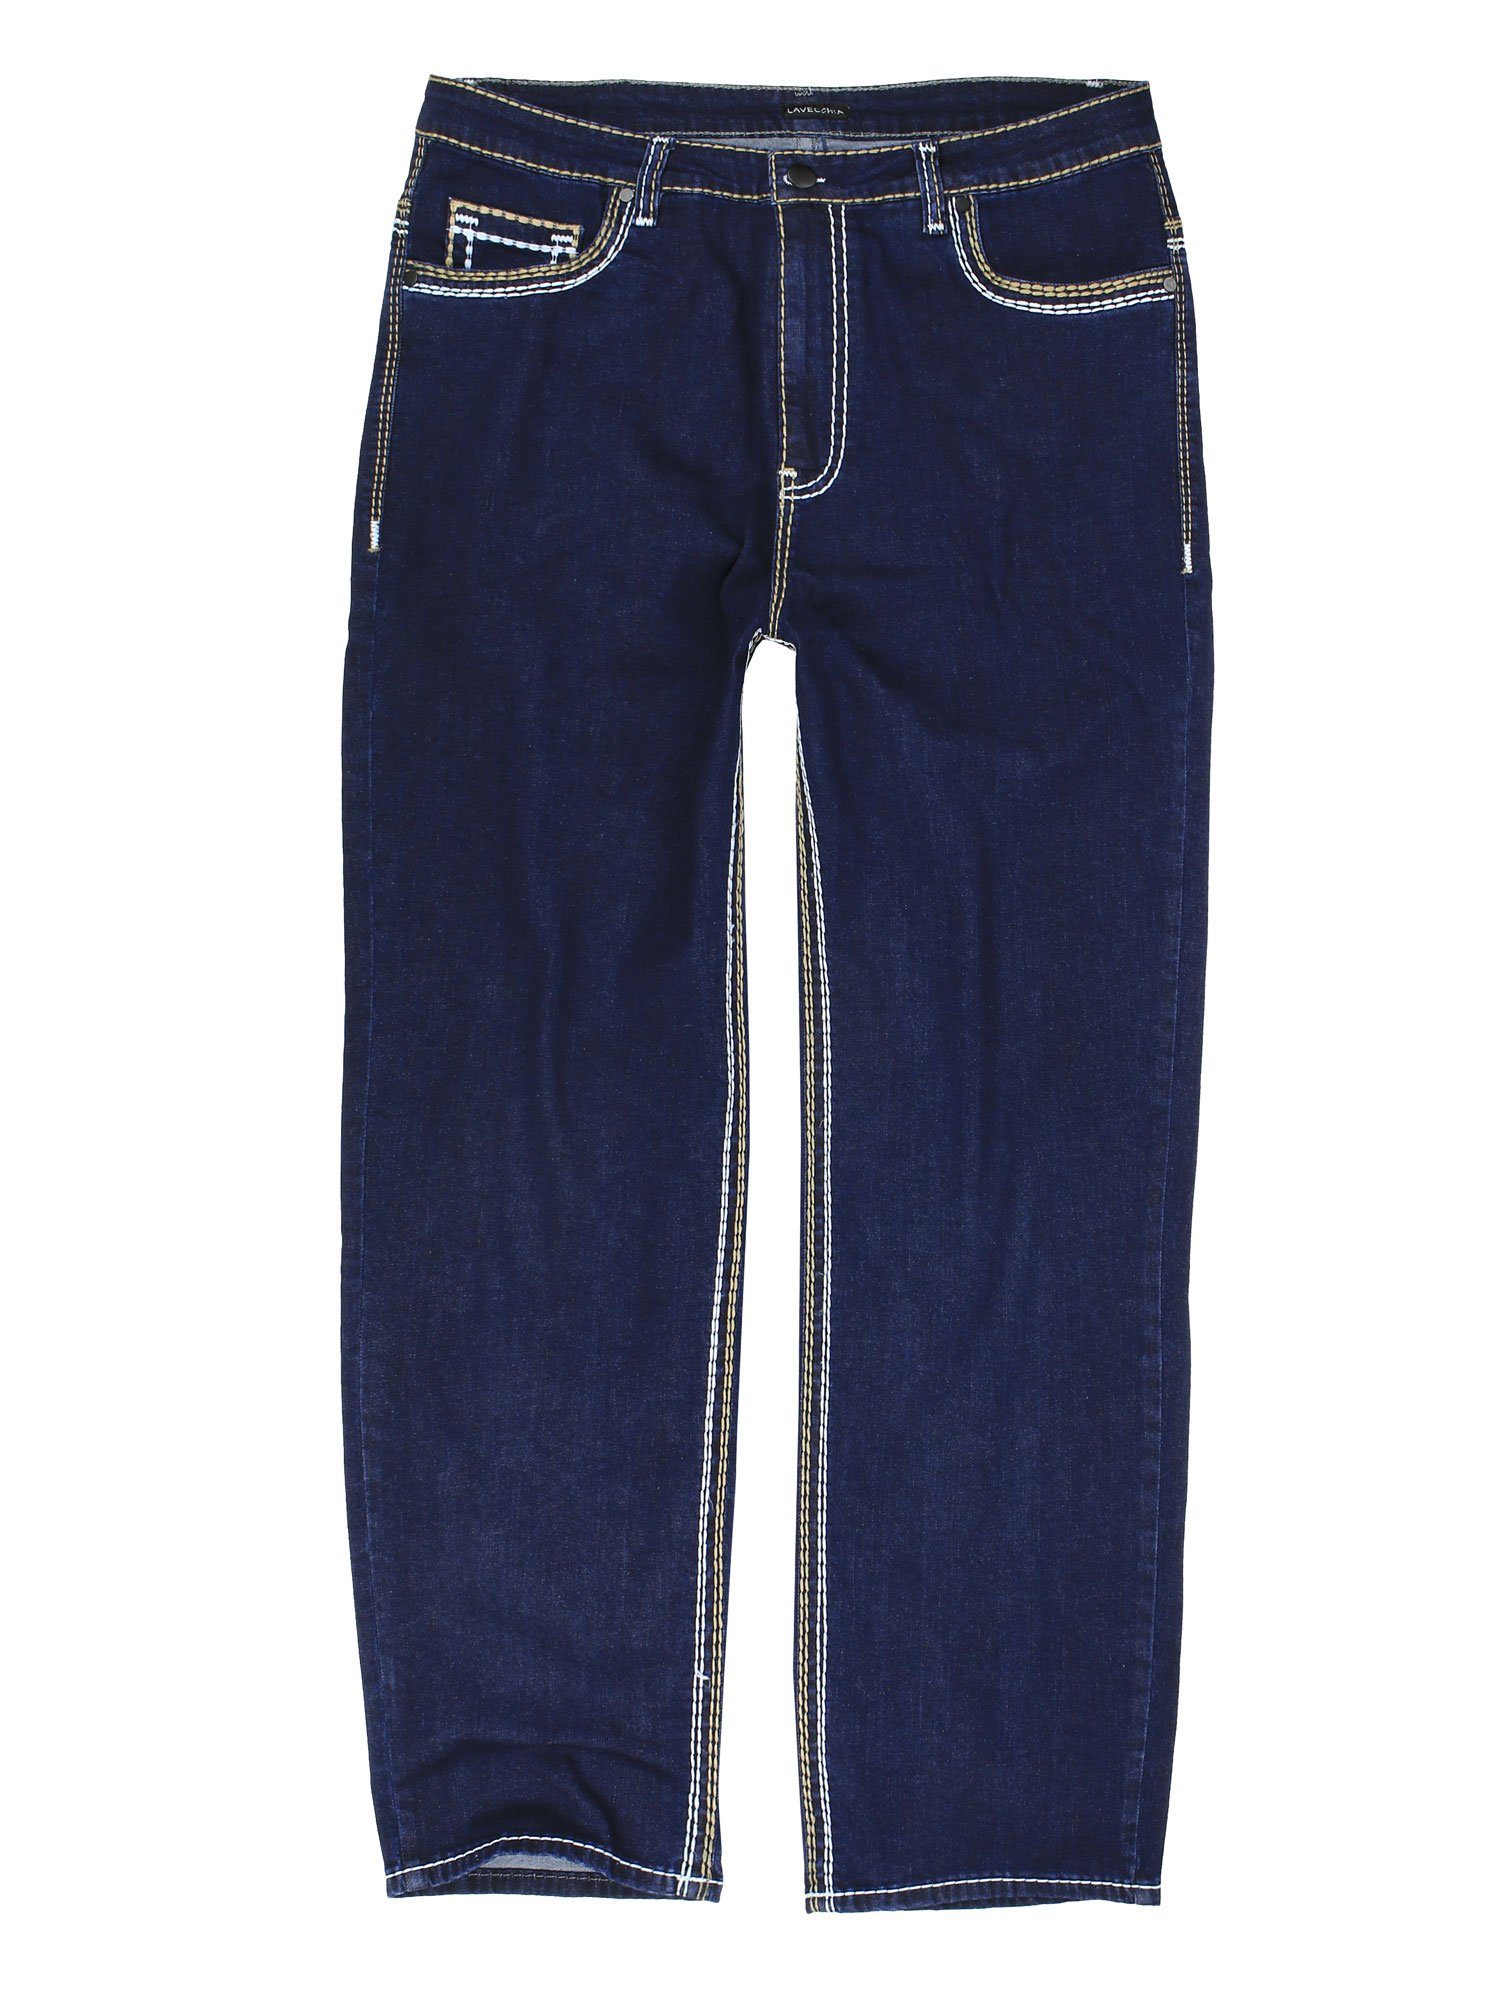 Herren Comfort-fit-Jeans Elasthan & dicker Lavecchia Übergrößen LV-503 Jeanshose mit Naht dunkelblau Stretch